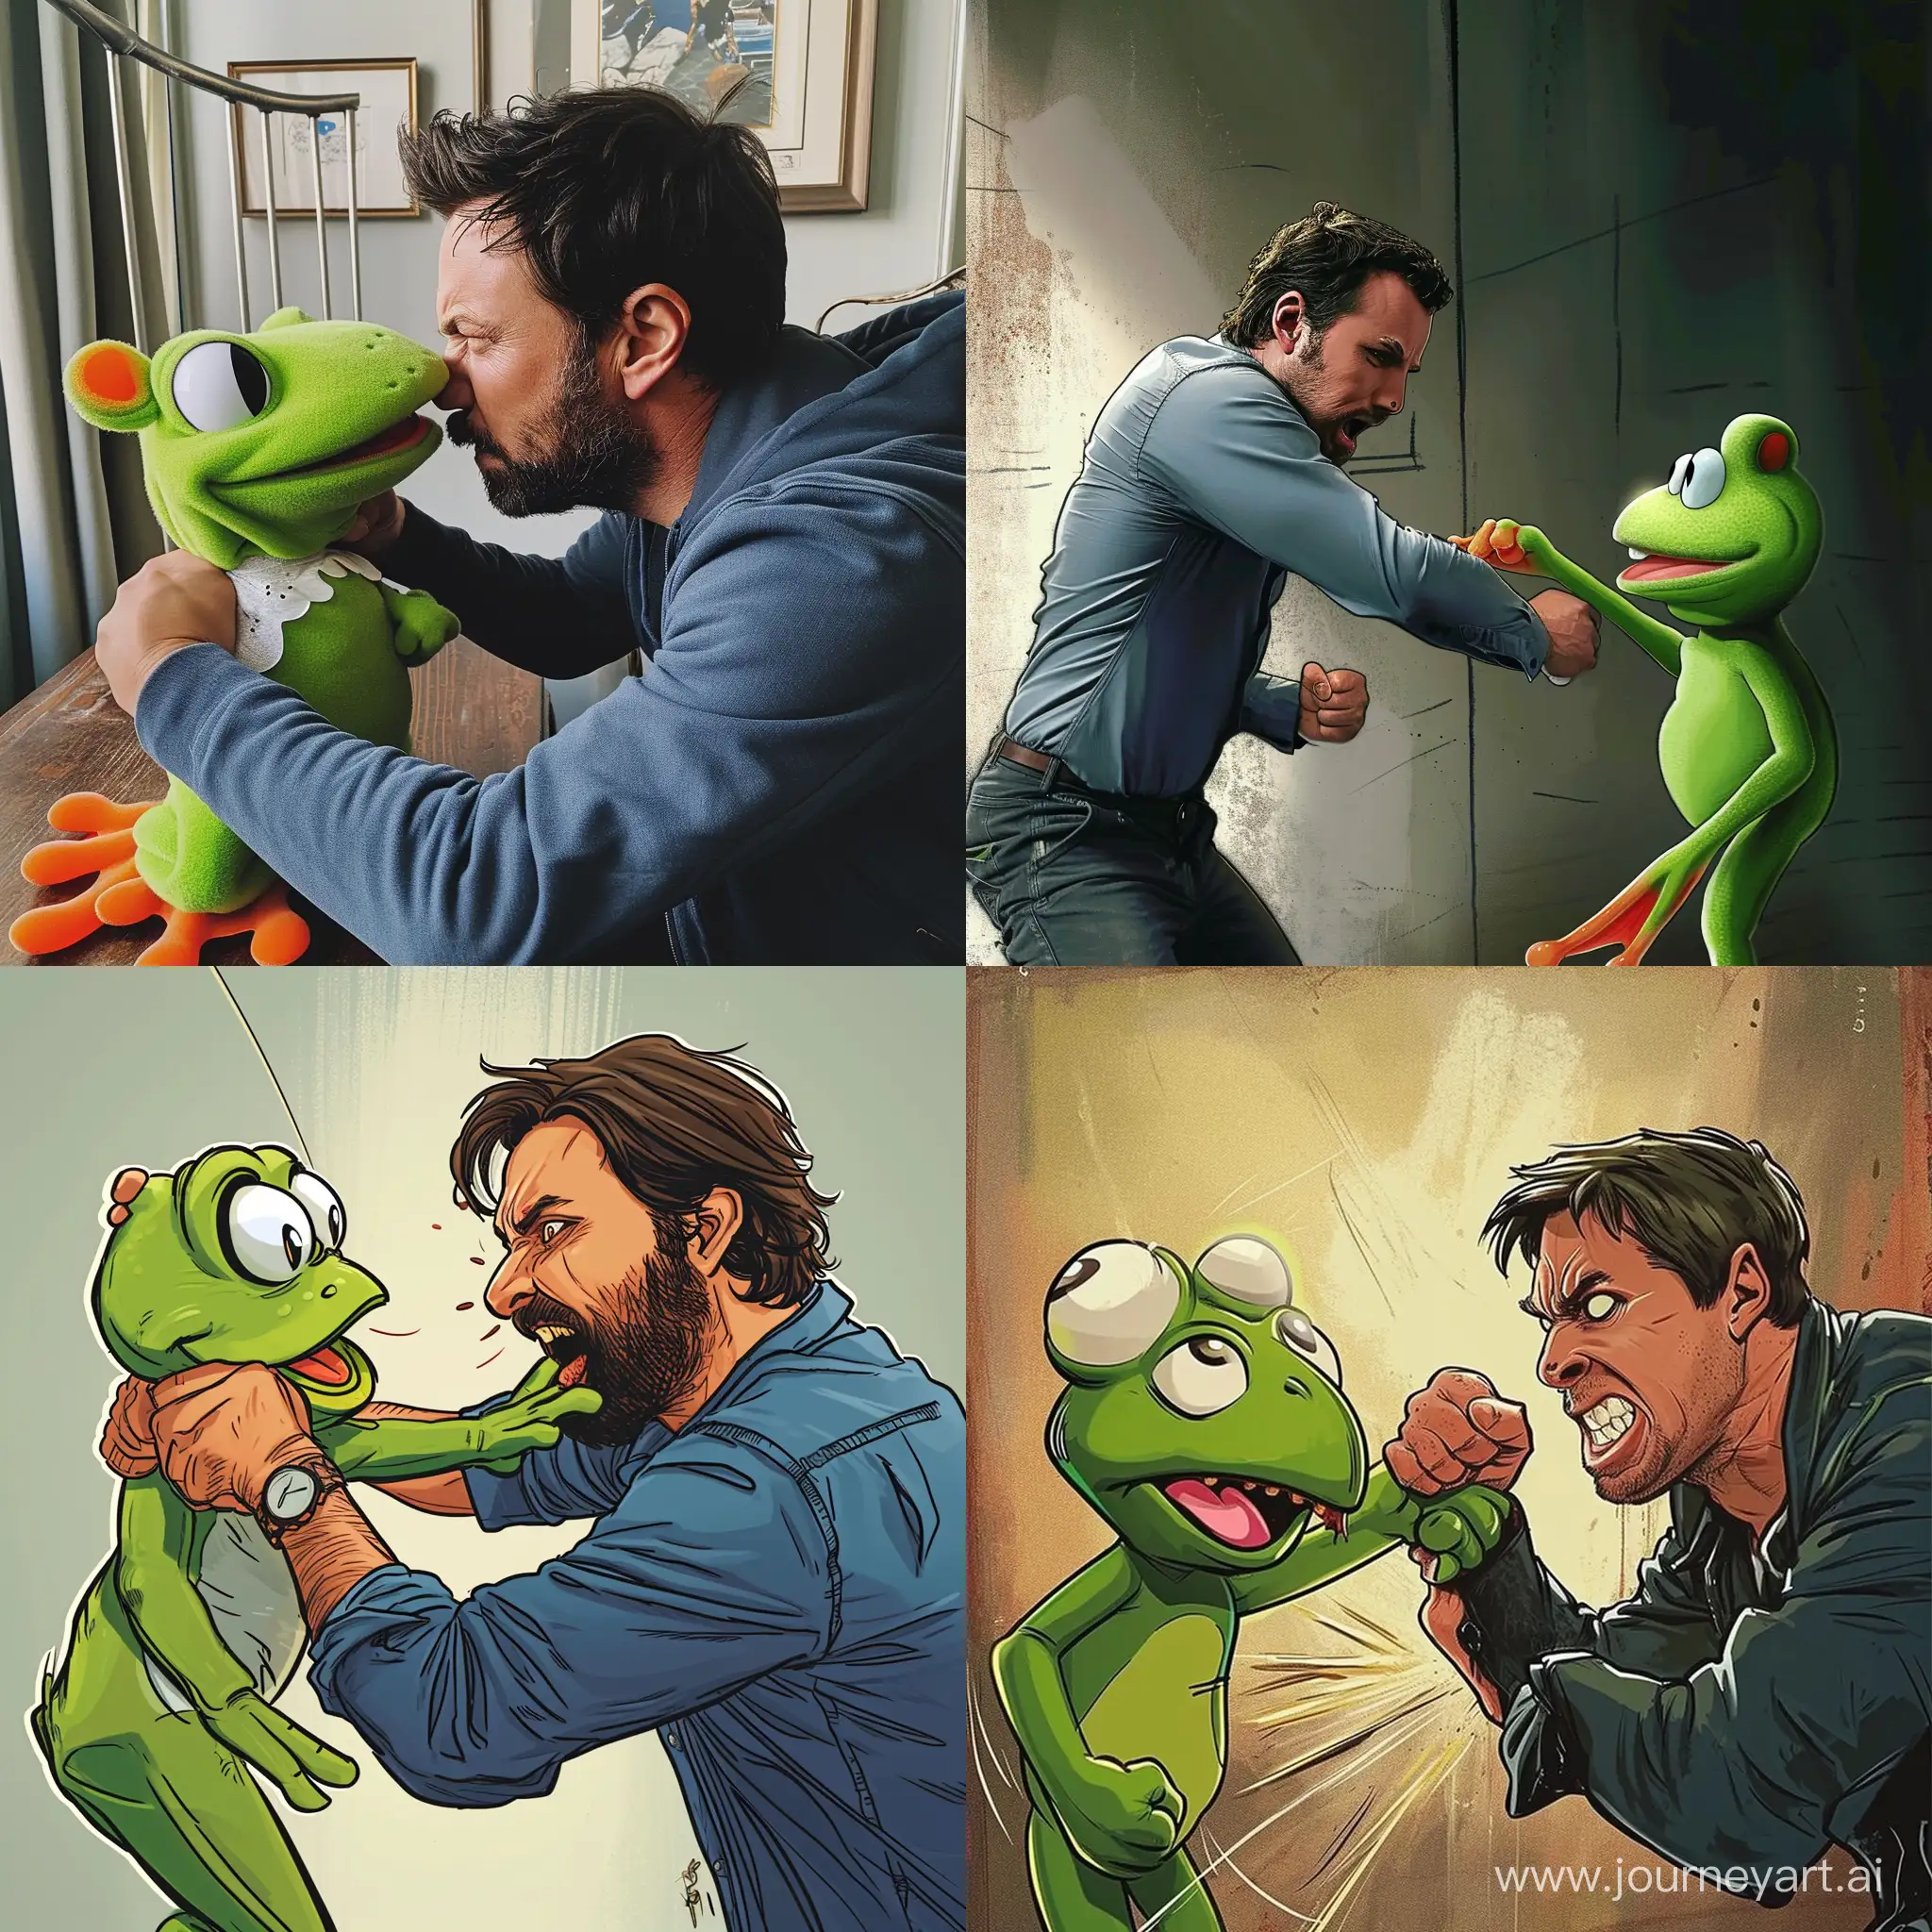 Ben-Affleck-Punching-Pepe-the-Frog-in-Nickelodeon-Cartoon